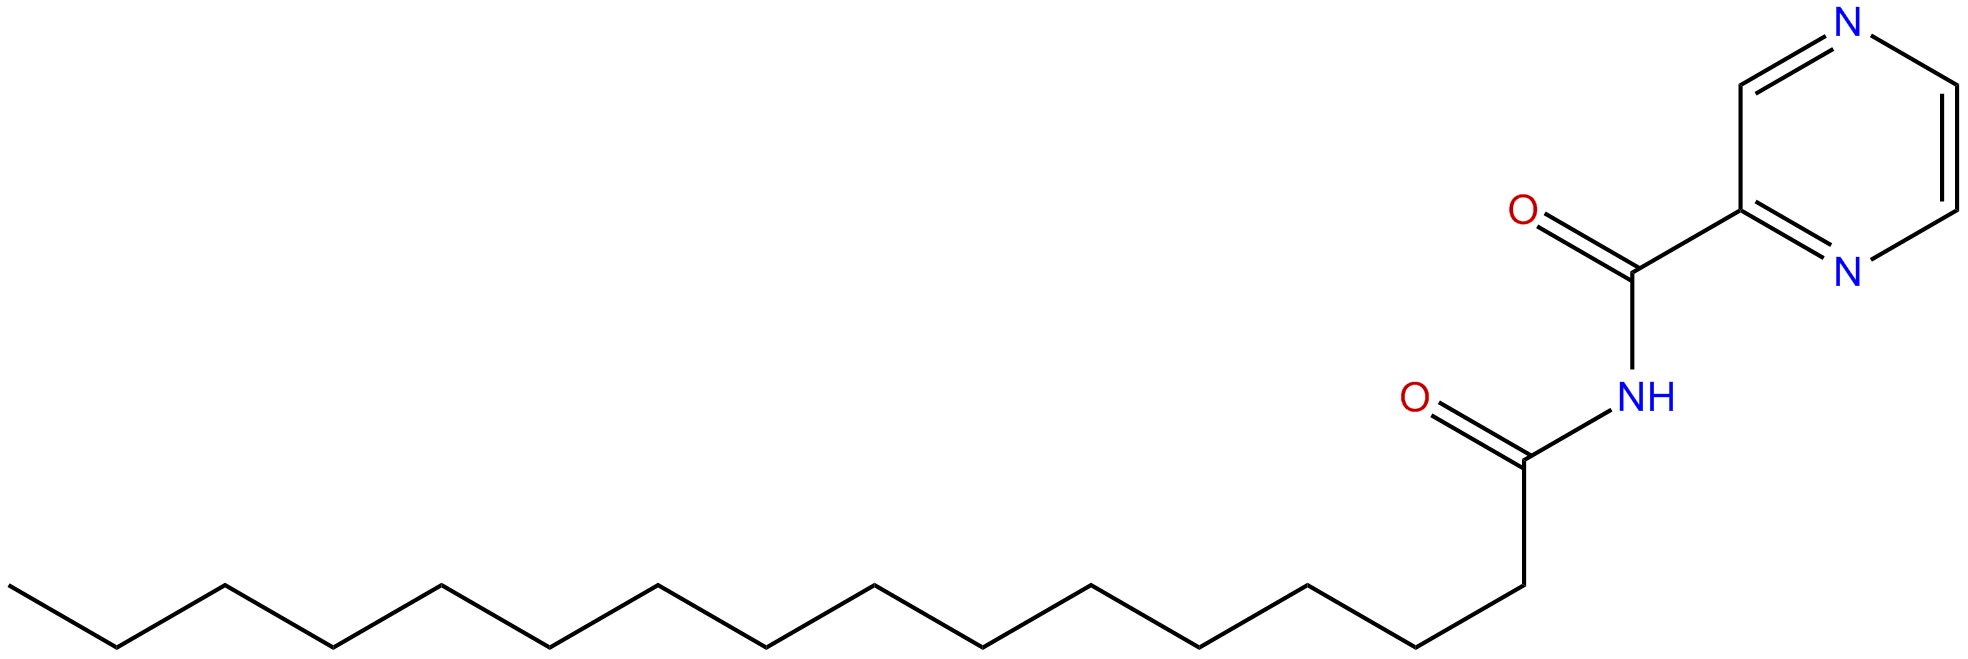 Image of N-palmitoyl-pyrazinamide